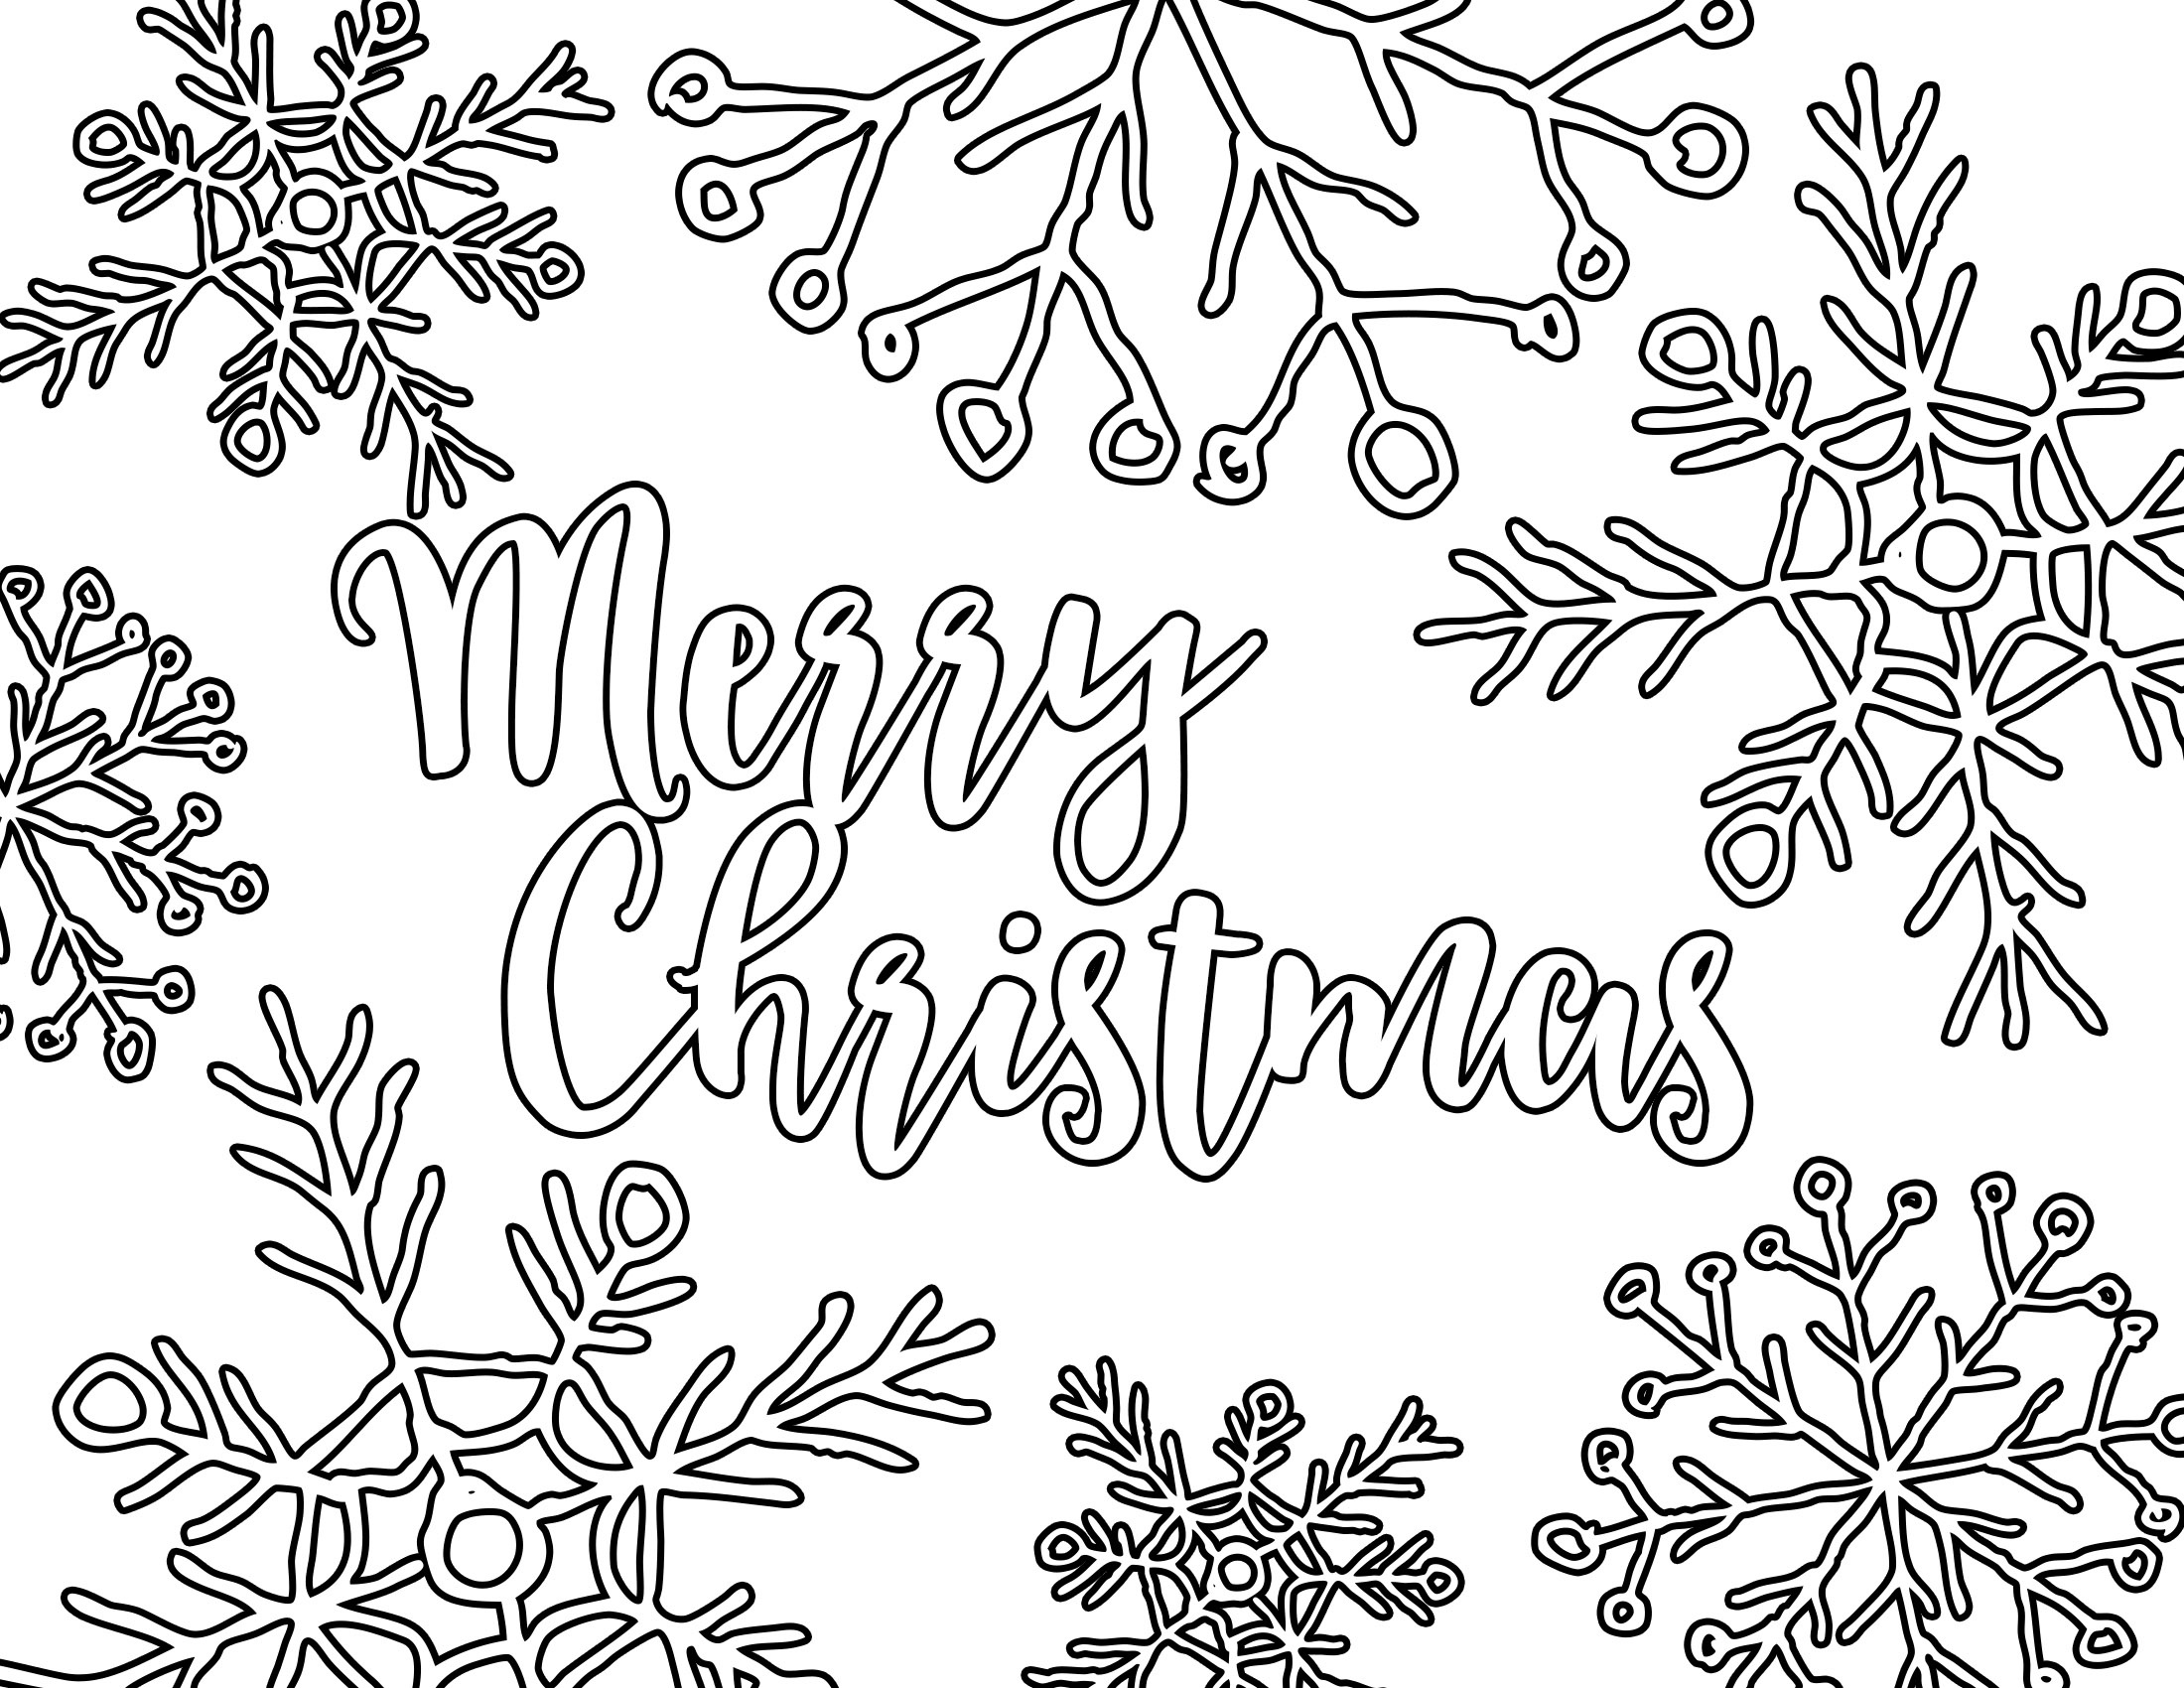 Free Printable Adult Coloring Page - Christmas Placemat - Our - Free Printable Christmas Placemats For Adults